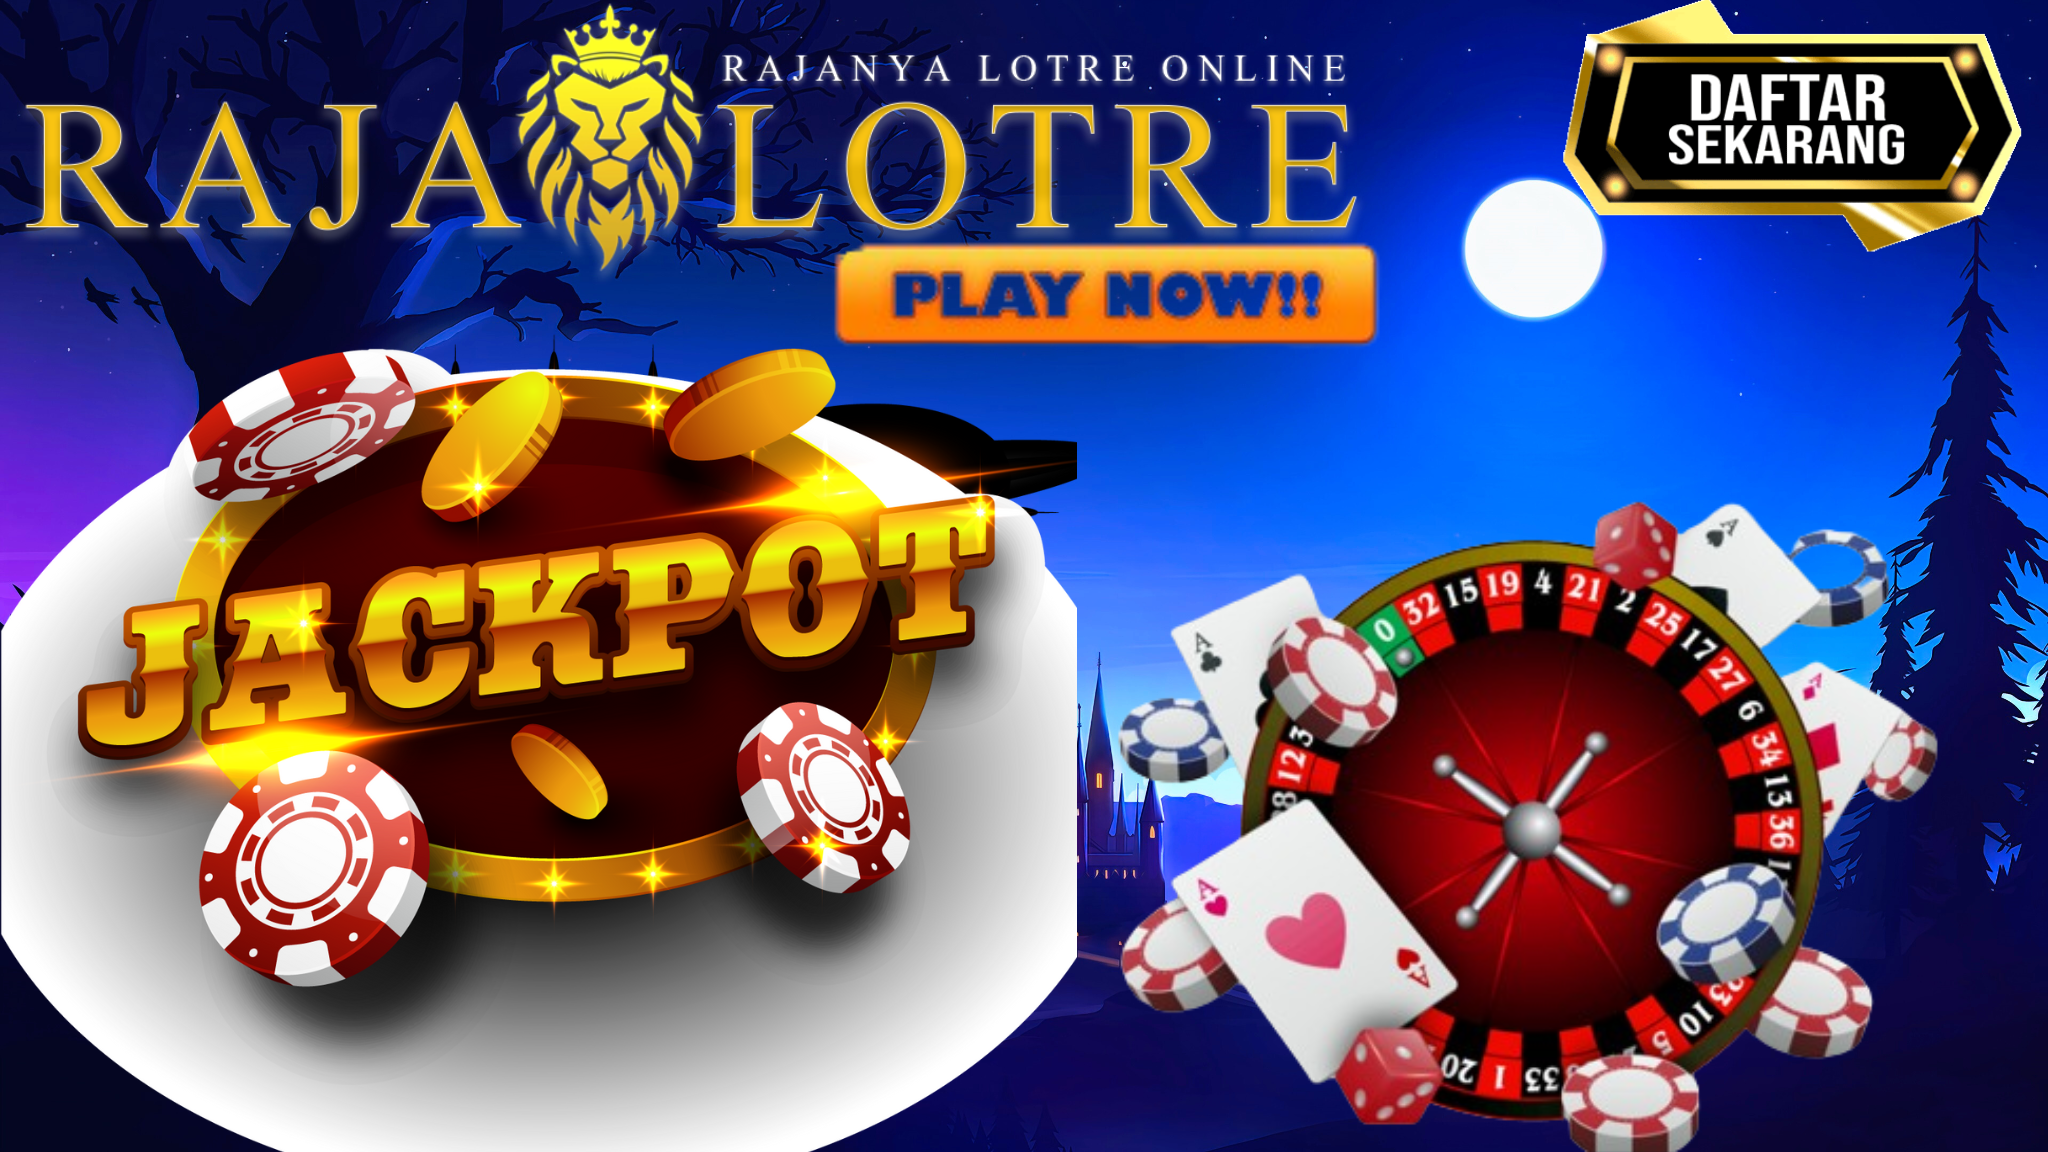 You are currently viewing Permainan Slot Online di Situs Toto Terpercaya RajaLotre